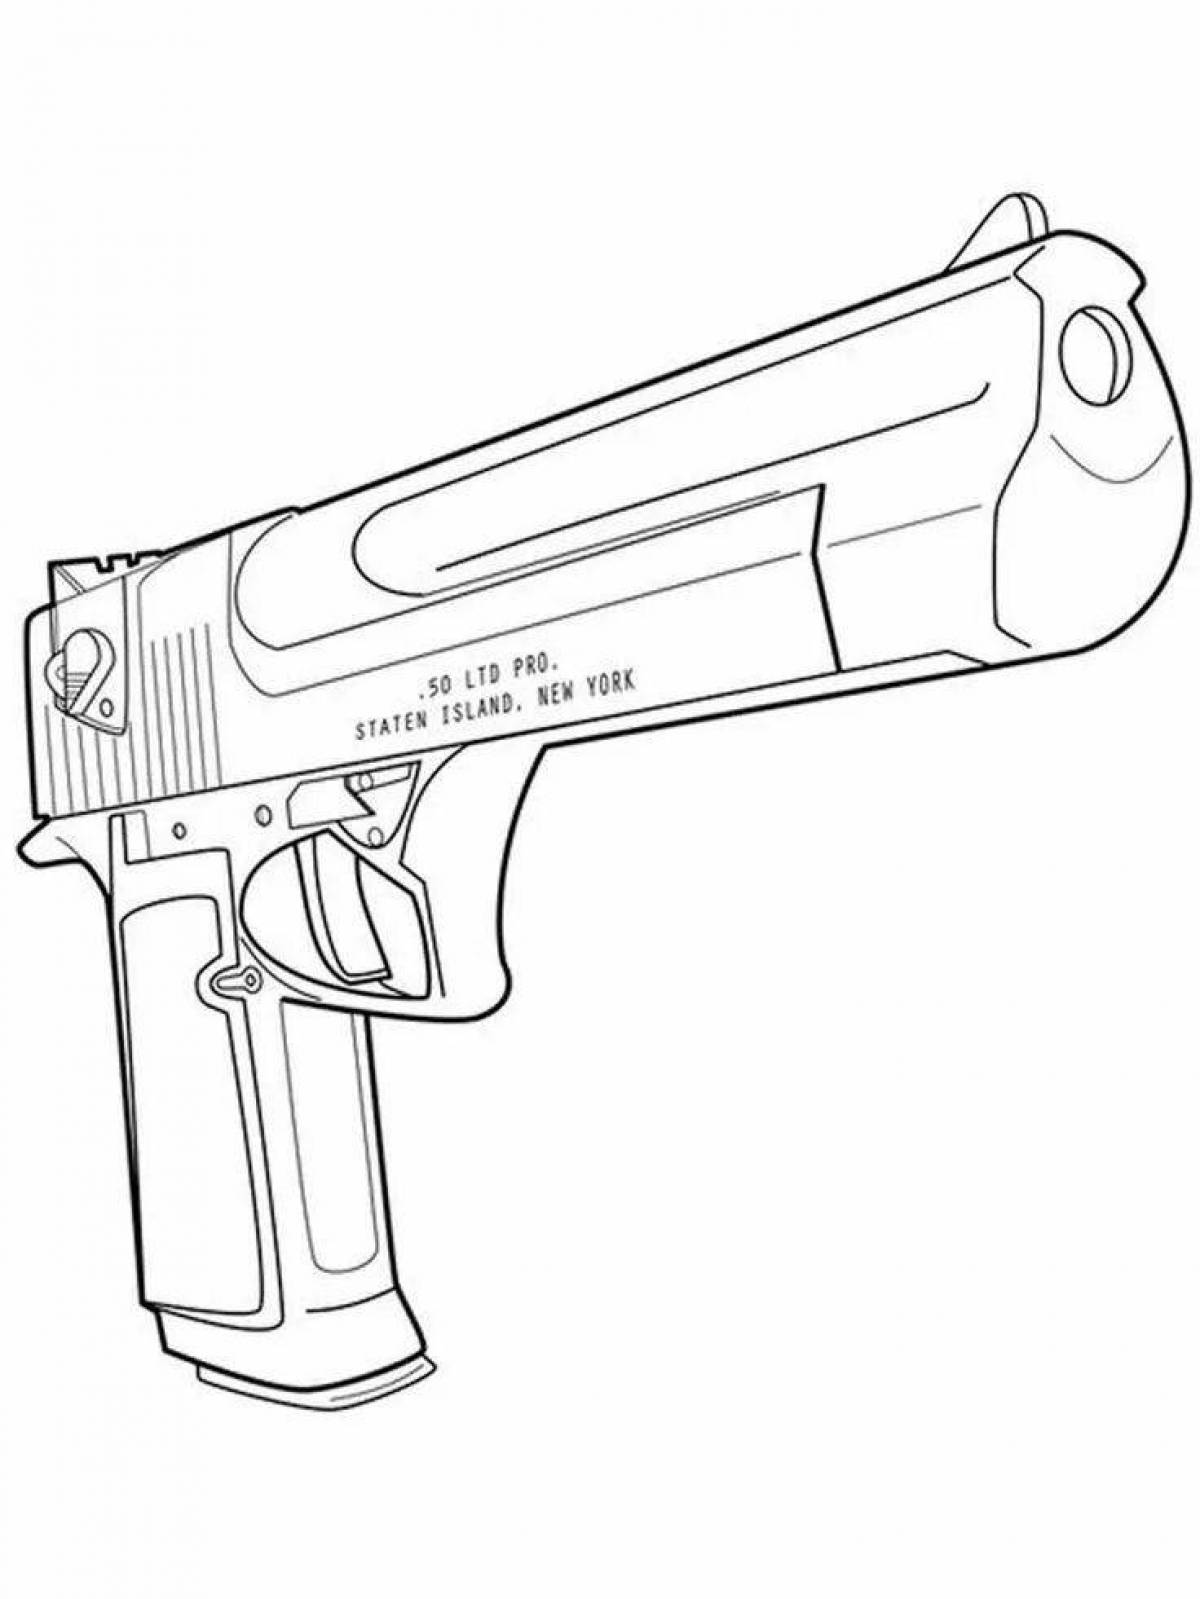 Great deagle gun coloring page